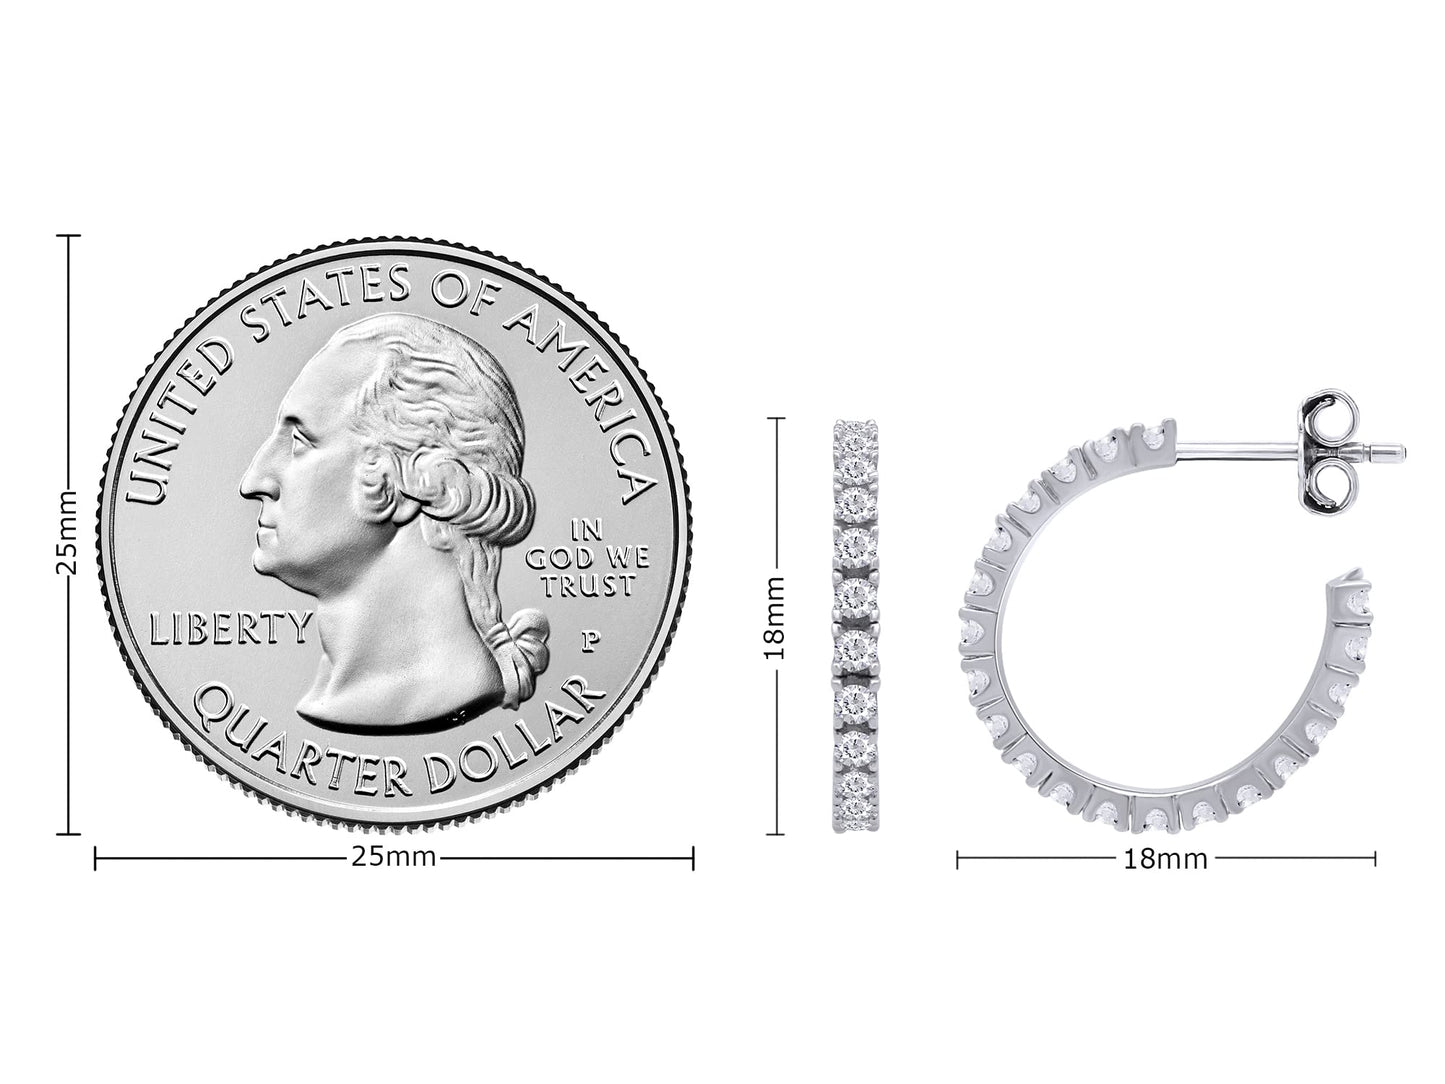 1/2 Carat Round Cut Lab Created Moissanite Diamond Eternity Hoop Earrings In 925 Sterling Silver (0.50 Cttw)